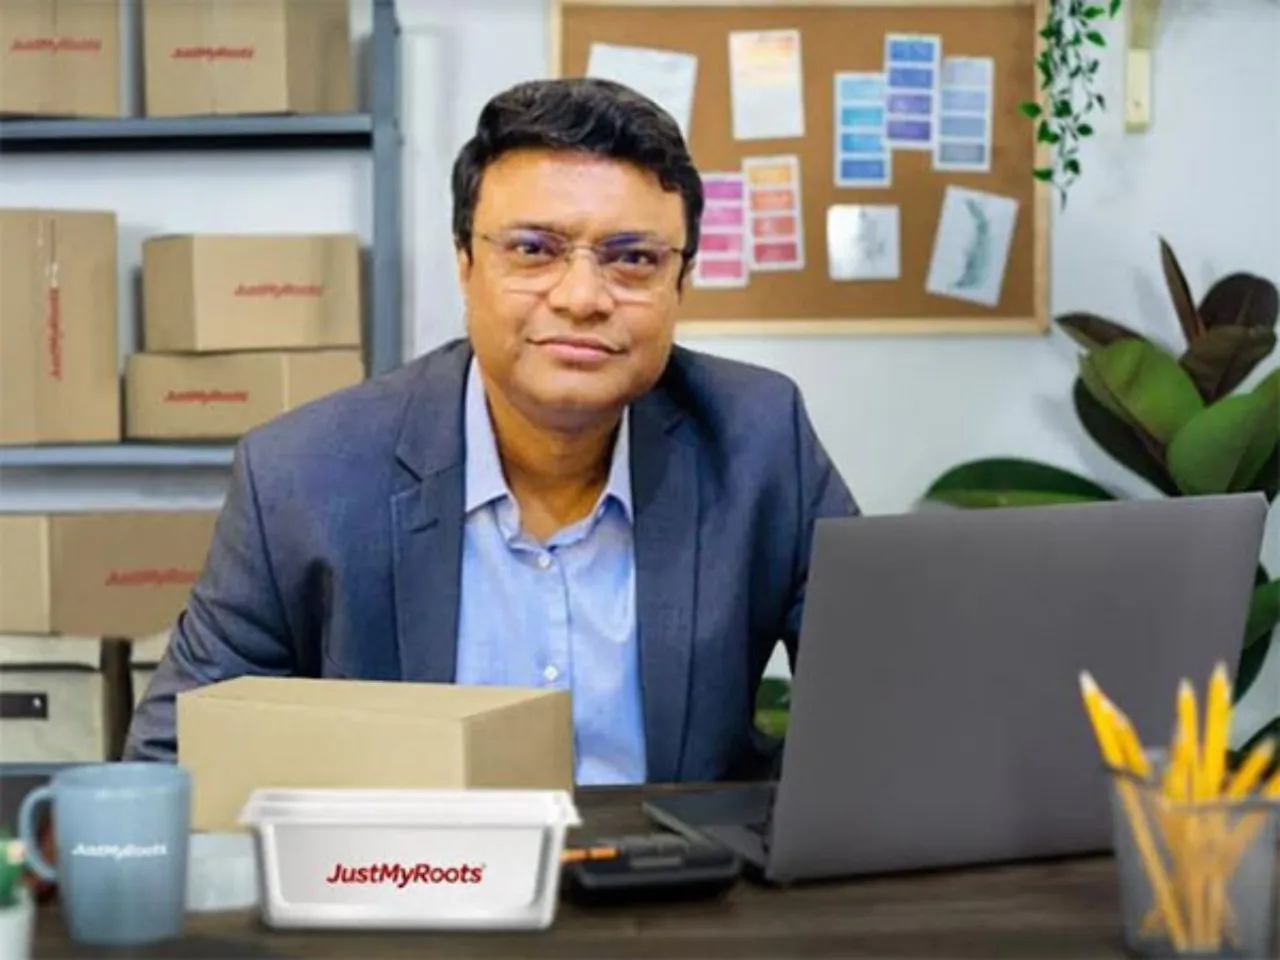 JustMyRoots CEO Samiran Sengupta